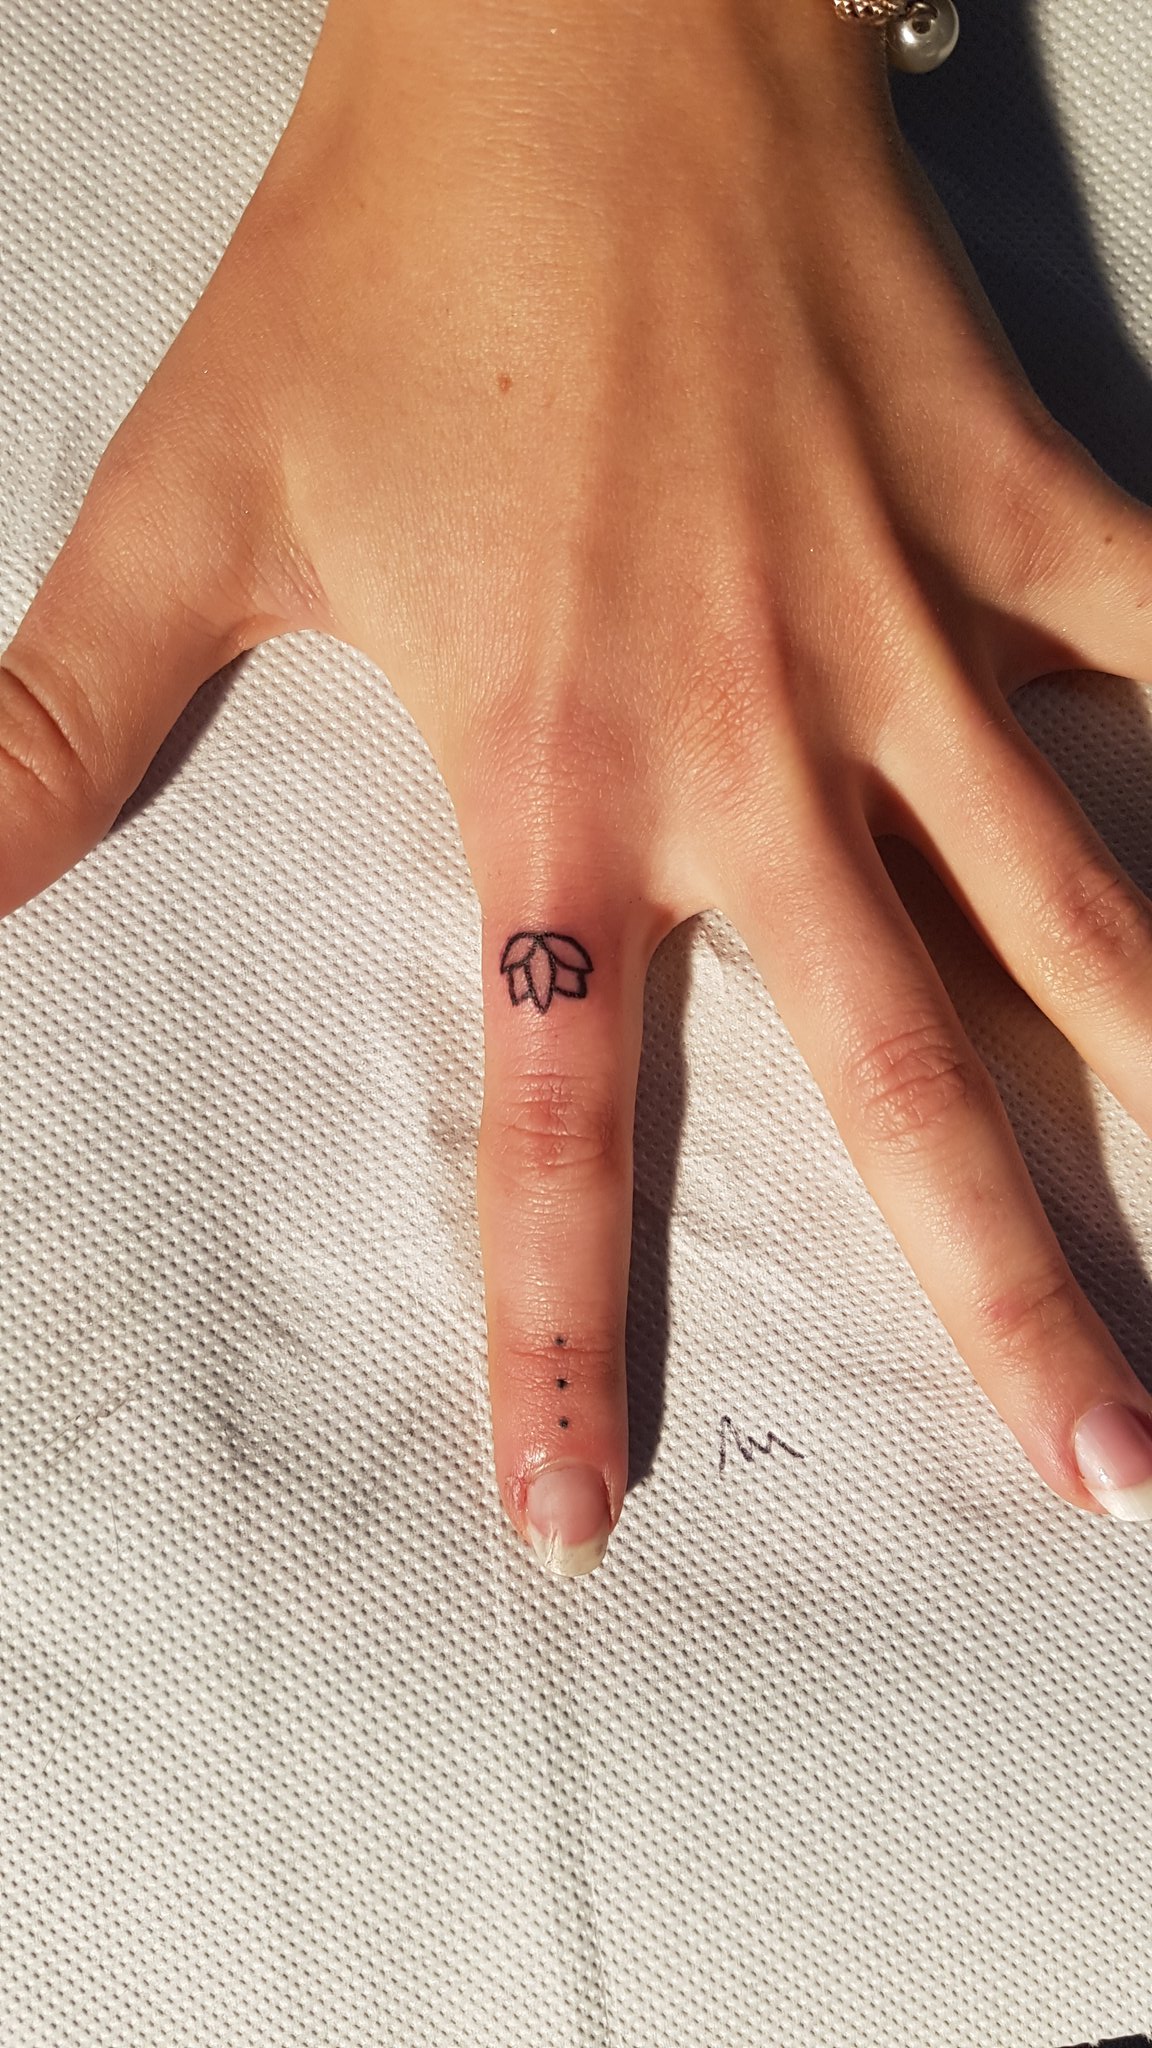 Lotus tattoo on the finger